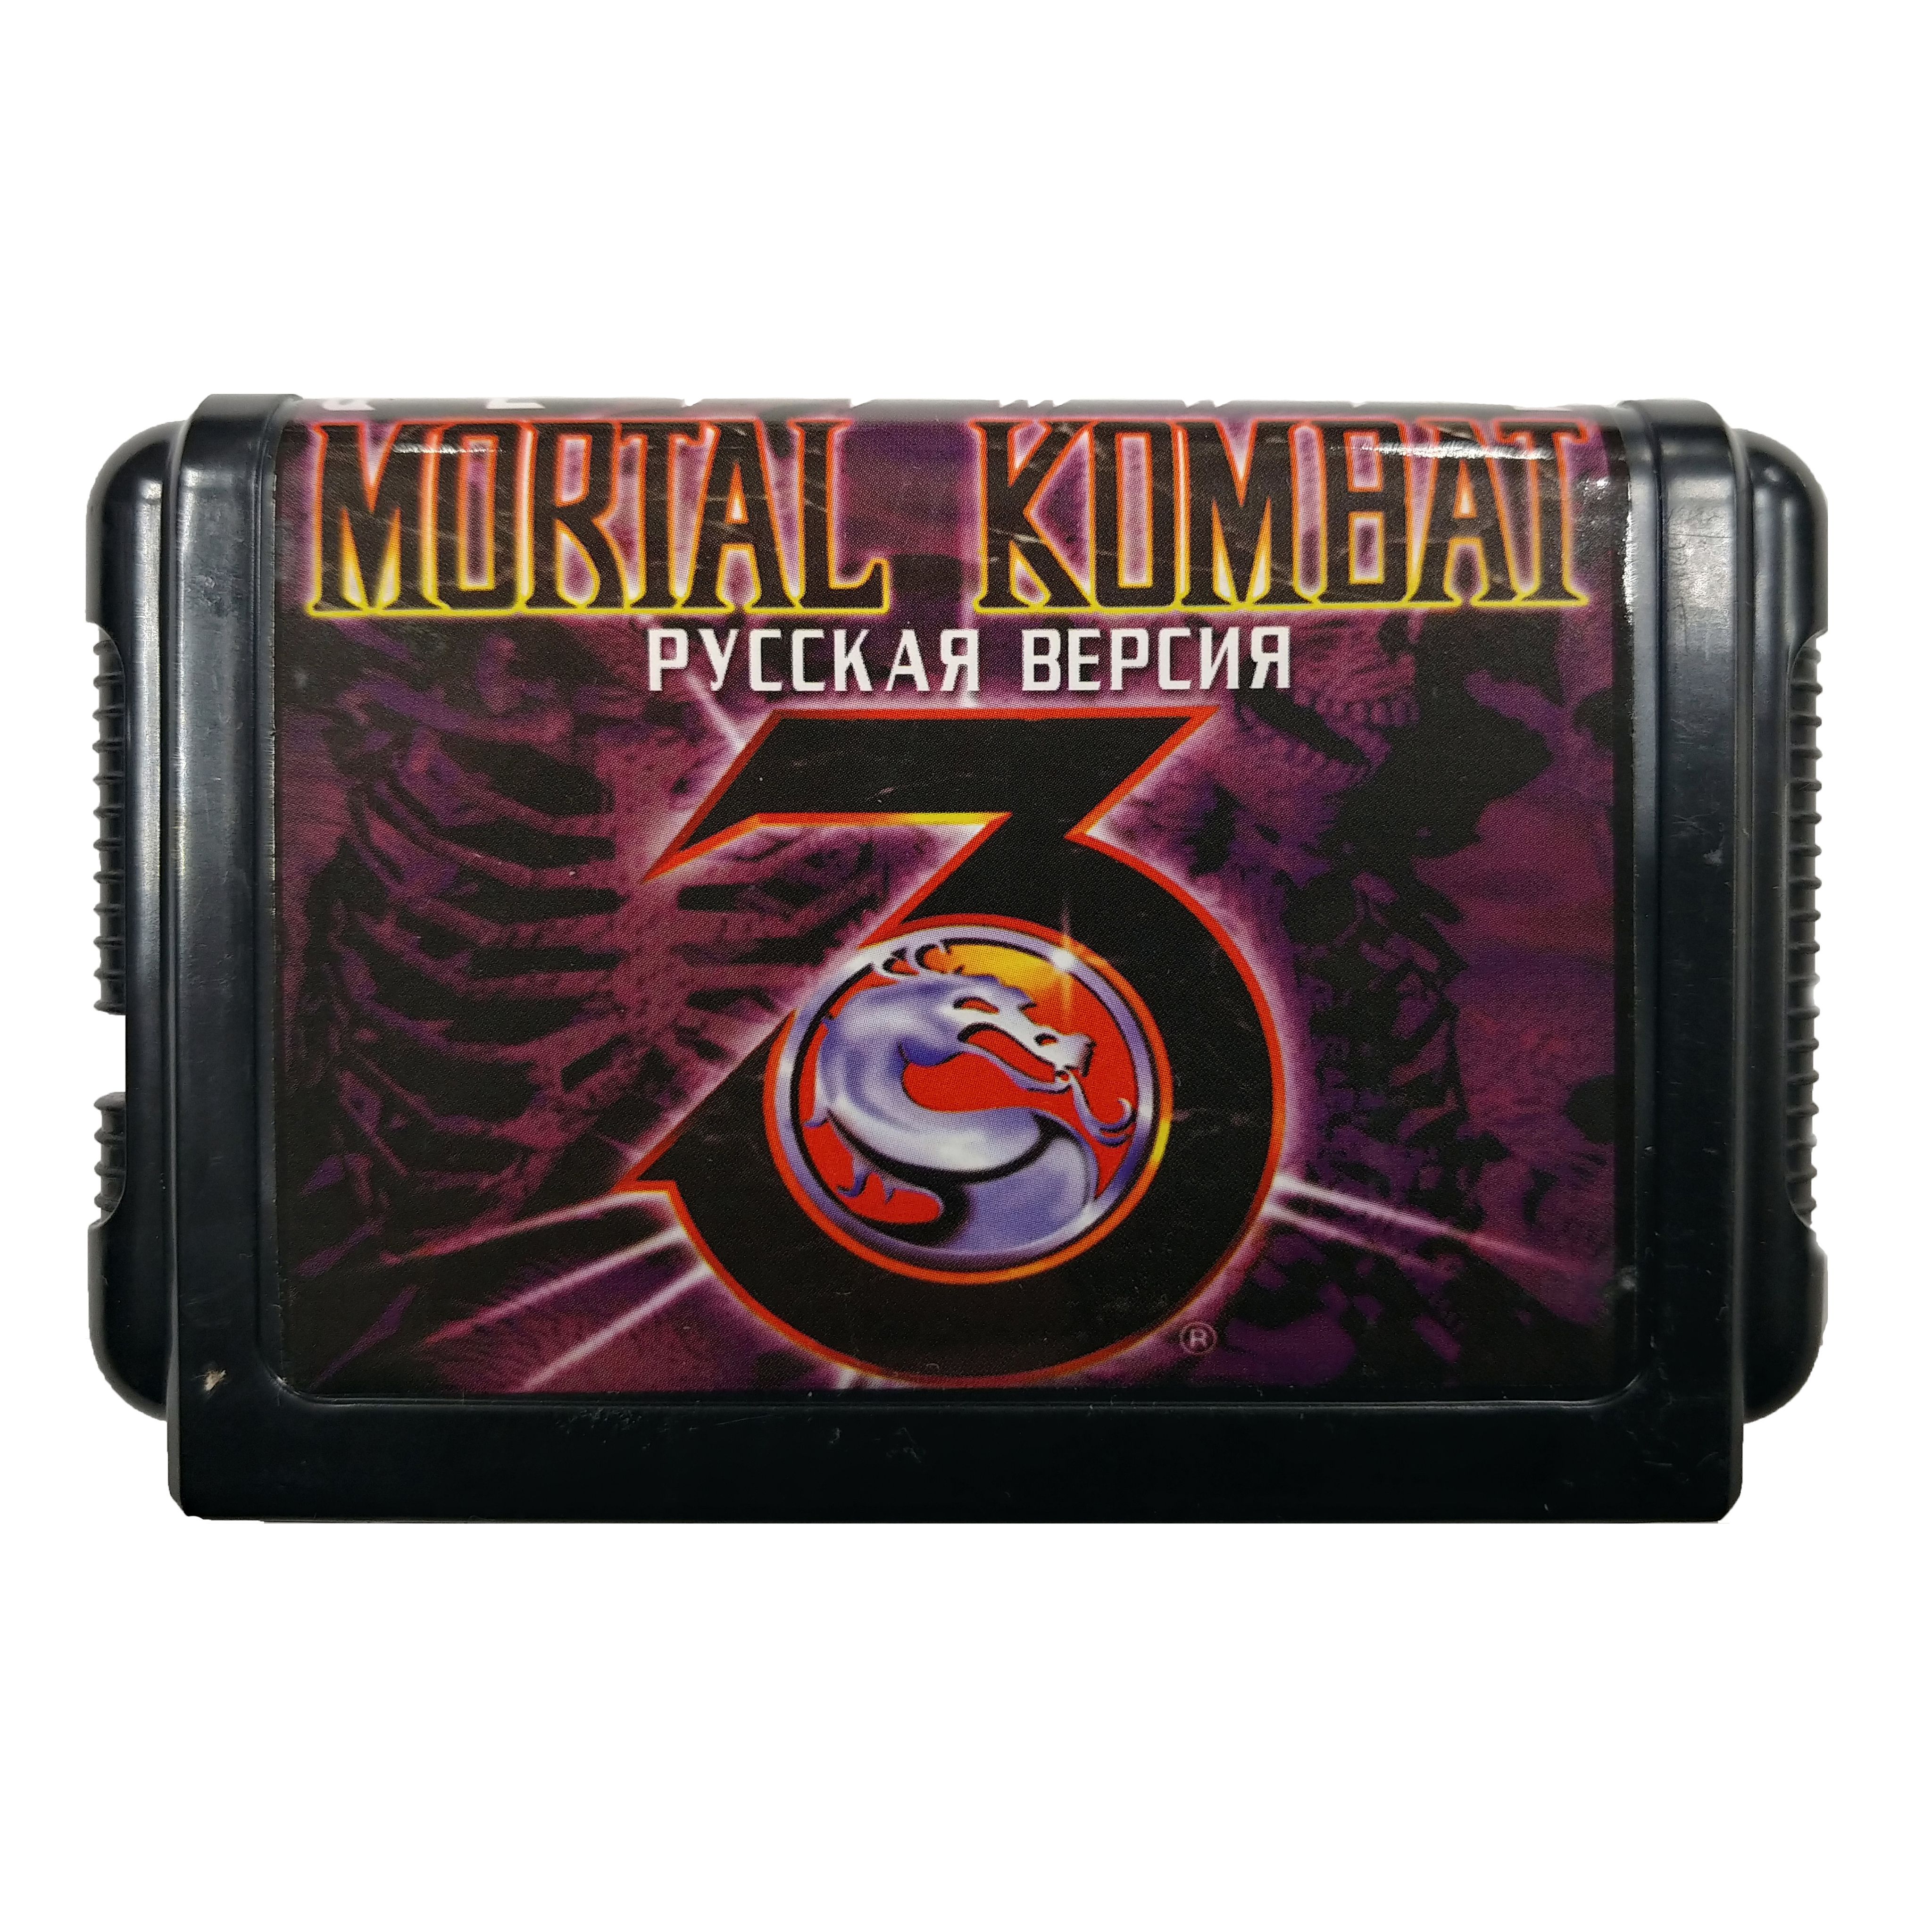 Сега 16 бит мортал комбат. Игровой картридж для Sega (16 bit) Mortal Kombat 3 Ultimate (dk3201). Mortal Kombat 3 Sega Mega Drive картридж. Игровой картридж сега 16 бит Mortal Kombat 3 Ultimate. Картриджи для Sega Mega Drive Mortal Combat.